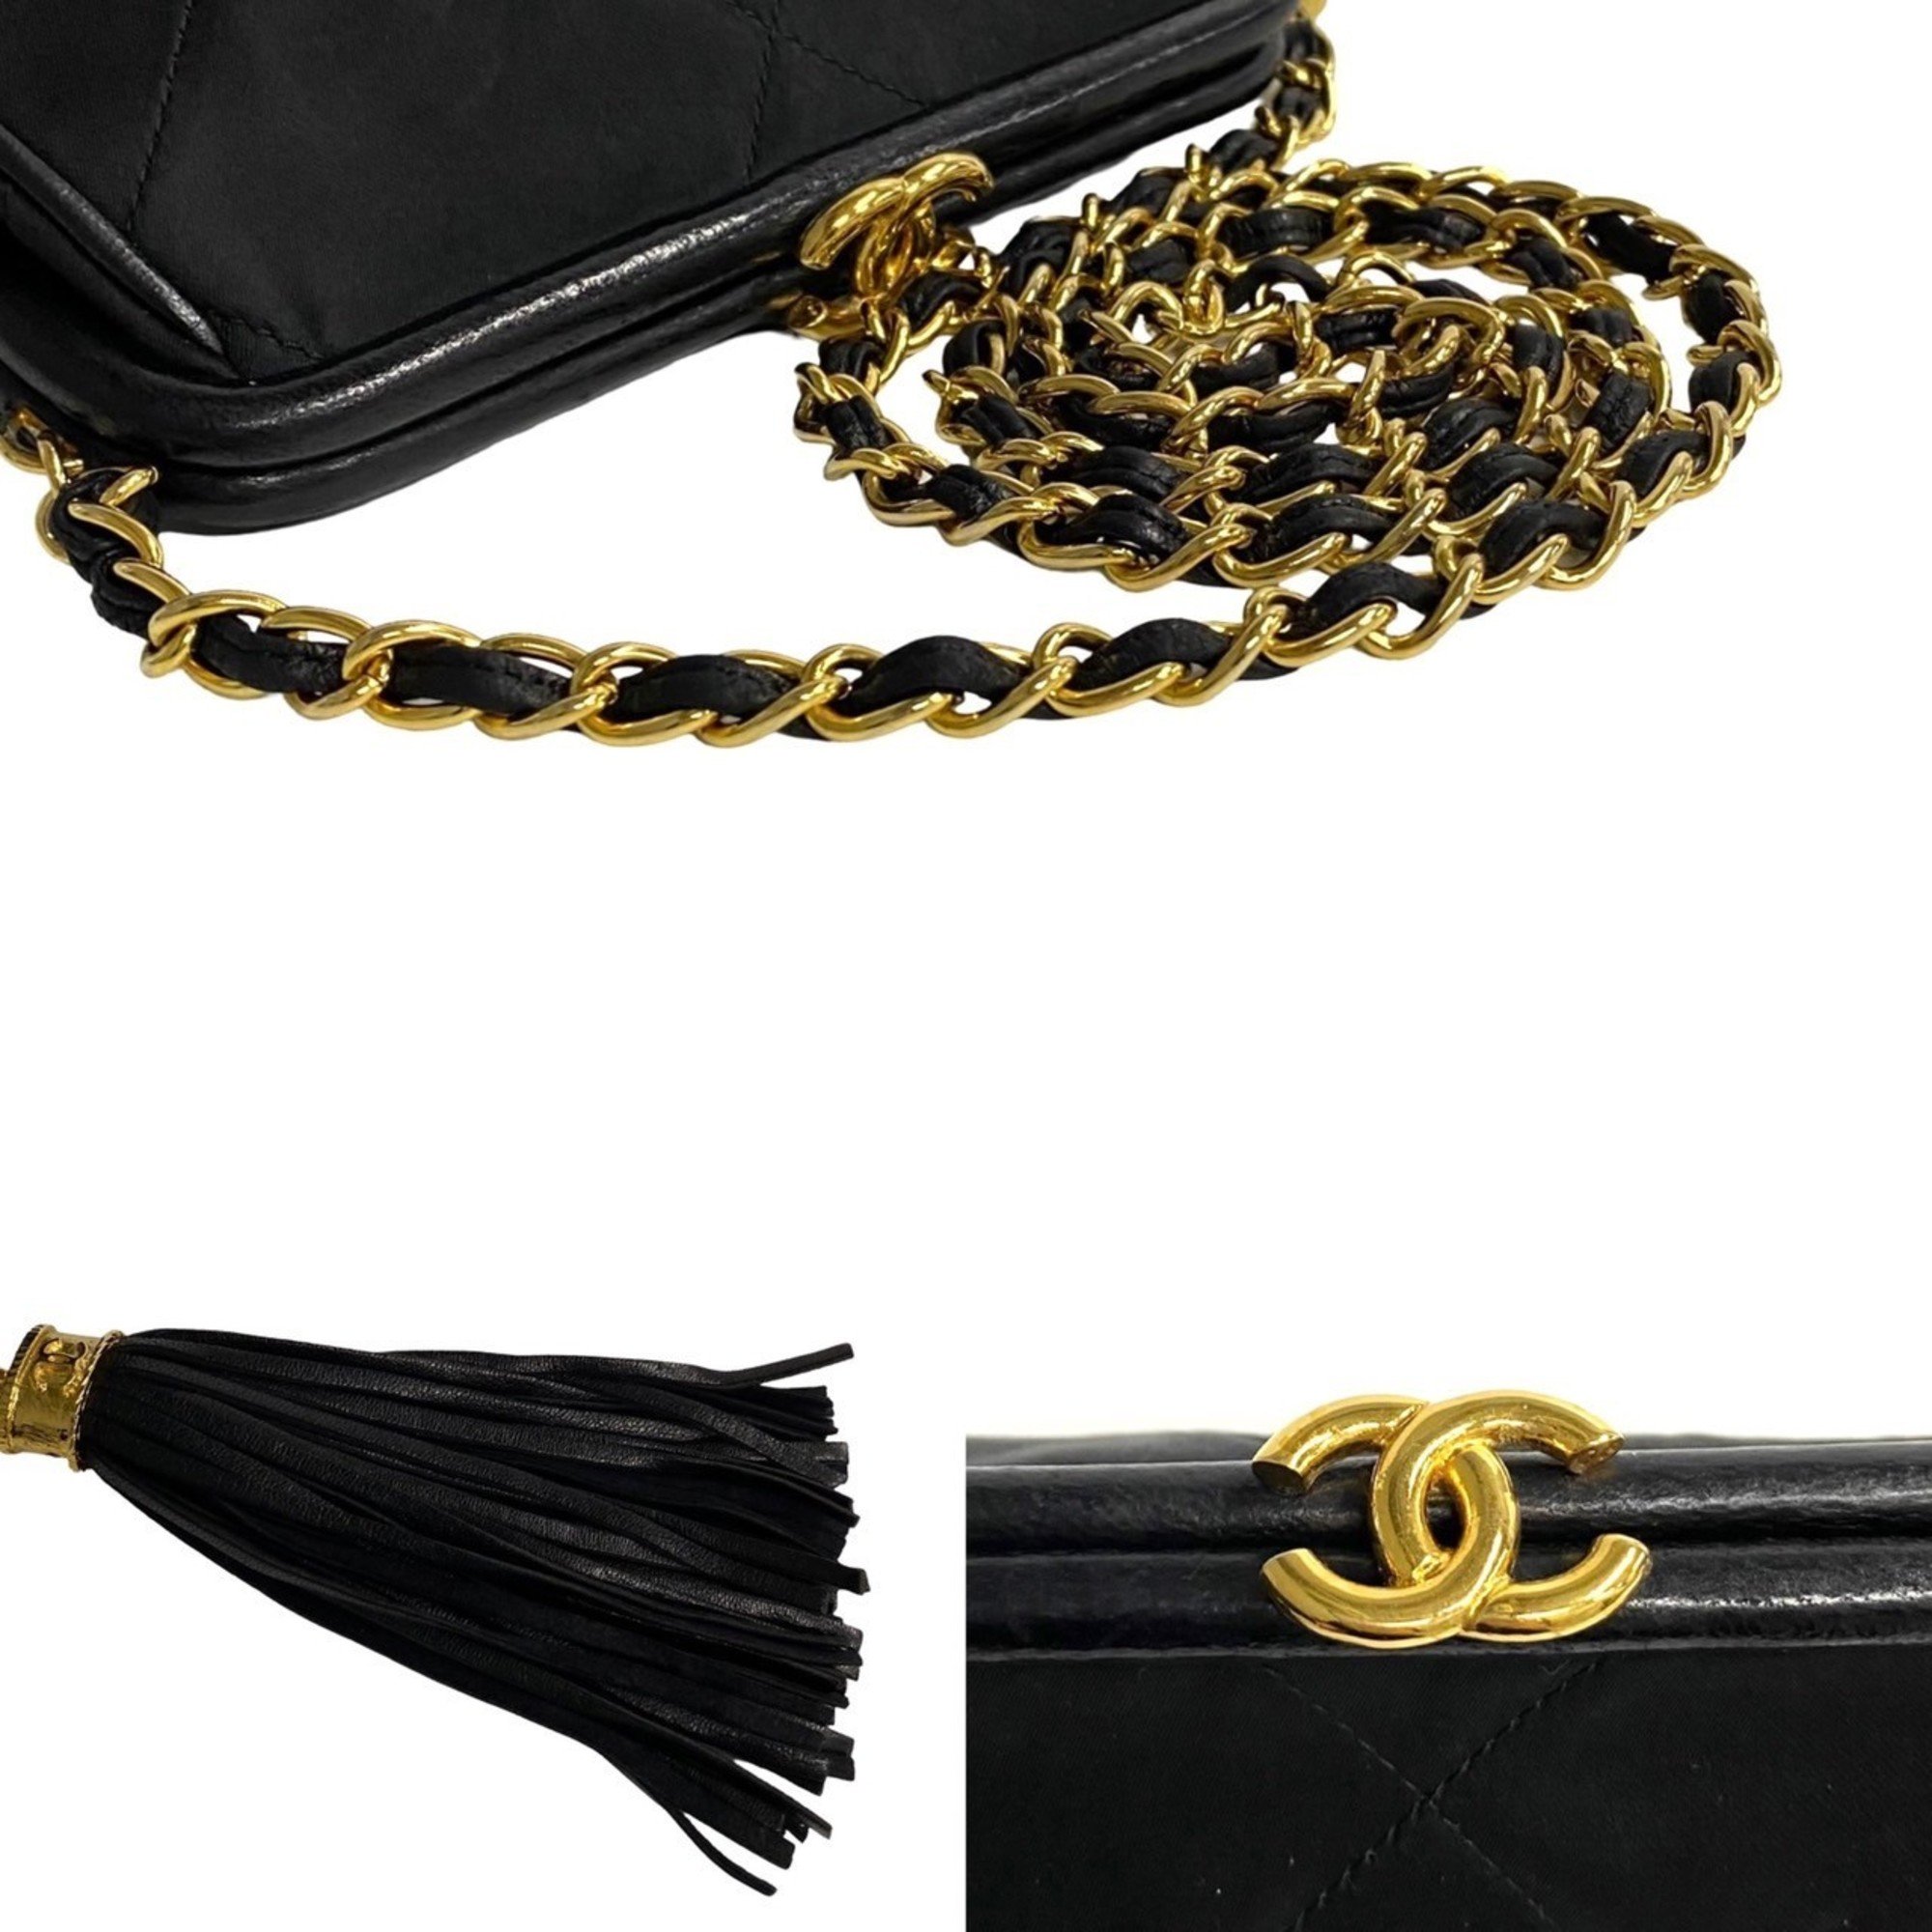 CHANEL Matelasse Satin Leather Tassel Chain Shoulder Bag Black 210-4